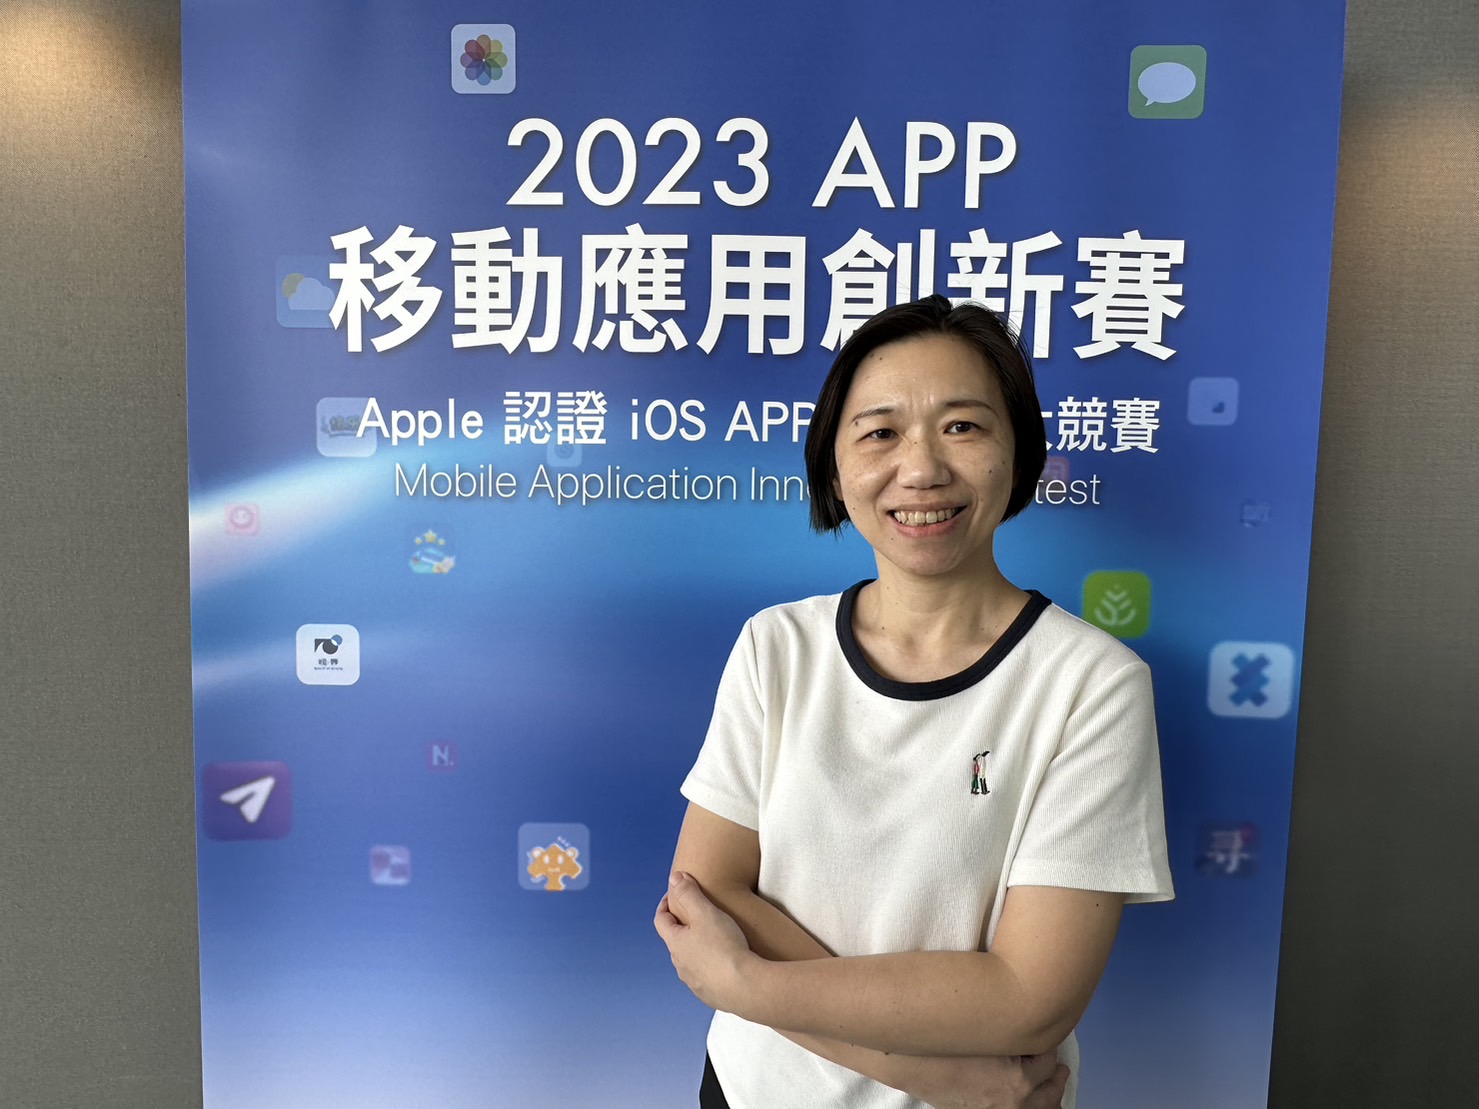 【2023 APP 移動應用創新賽】iOS開發者年年倍增 台灣最大iOS App競賽成新鮮人領先職場關鍵